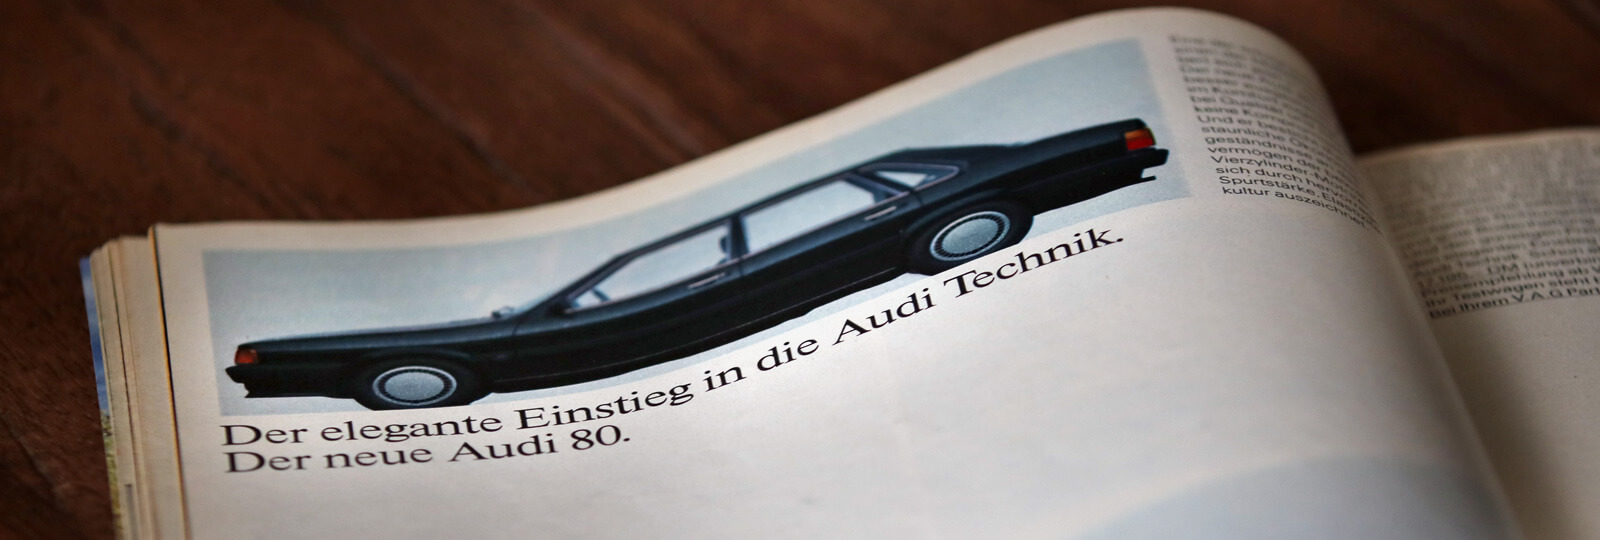 Audi Werbung 80er